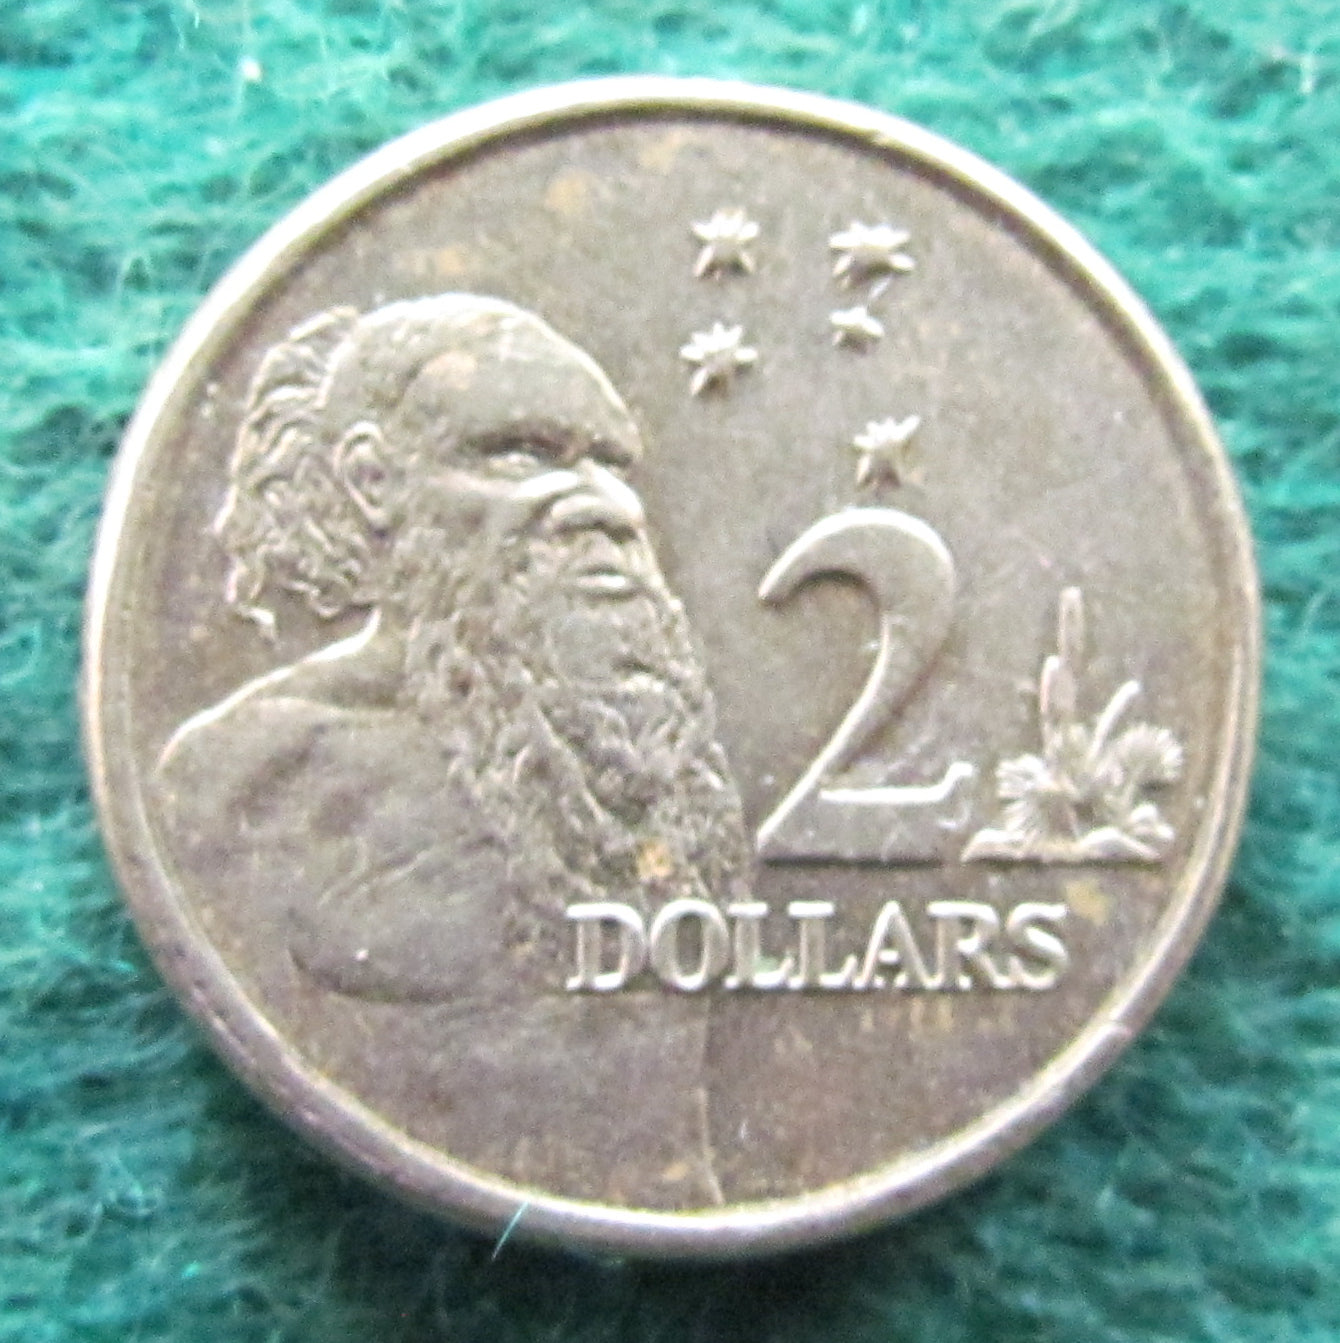 Australian 2004 2 Dollar Aboriginal Elder Queen Elizabeth Coin - Circulated